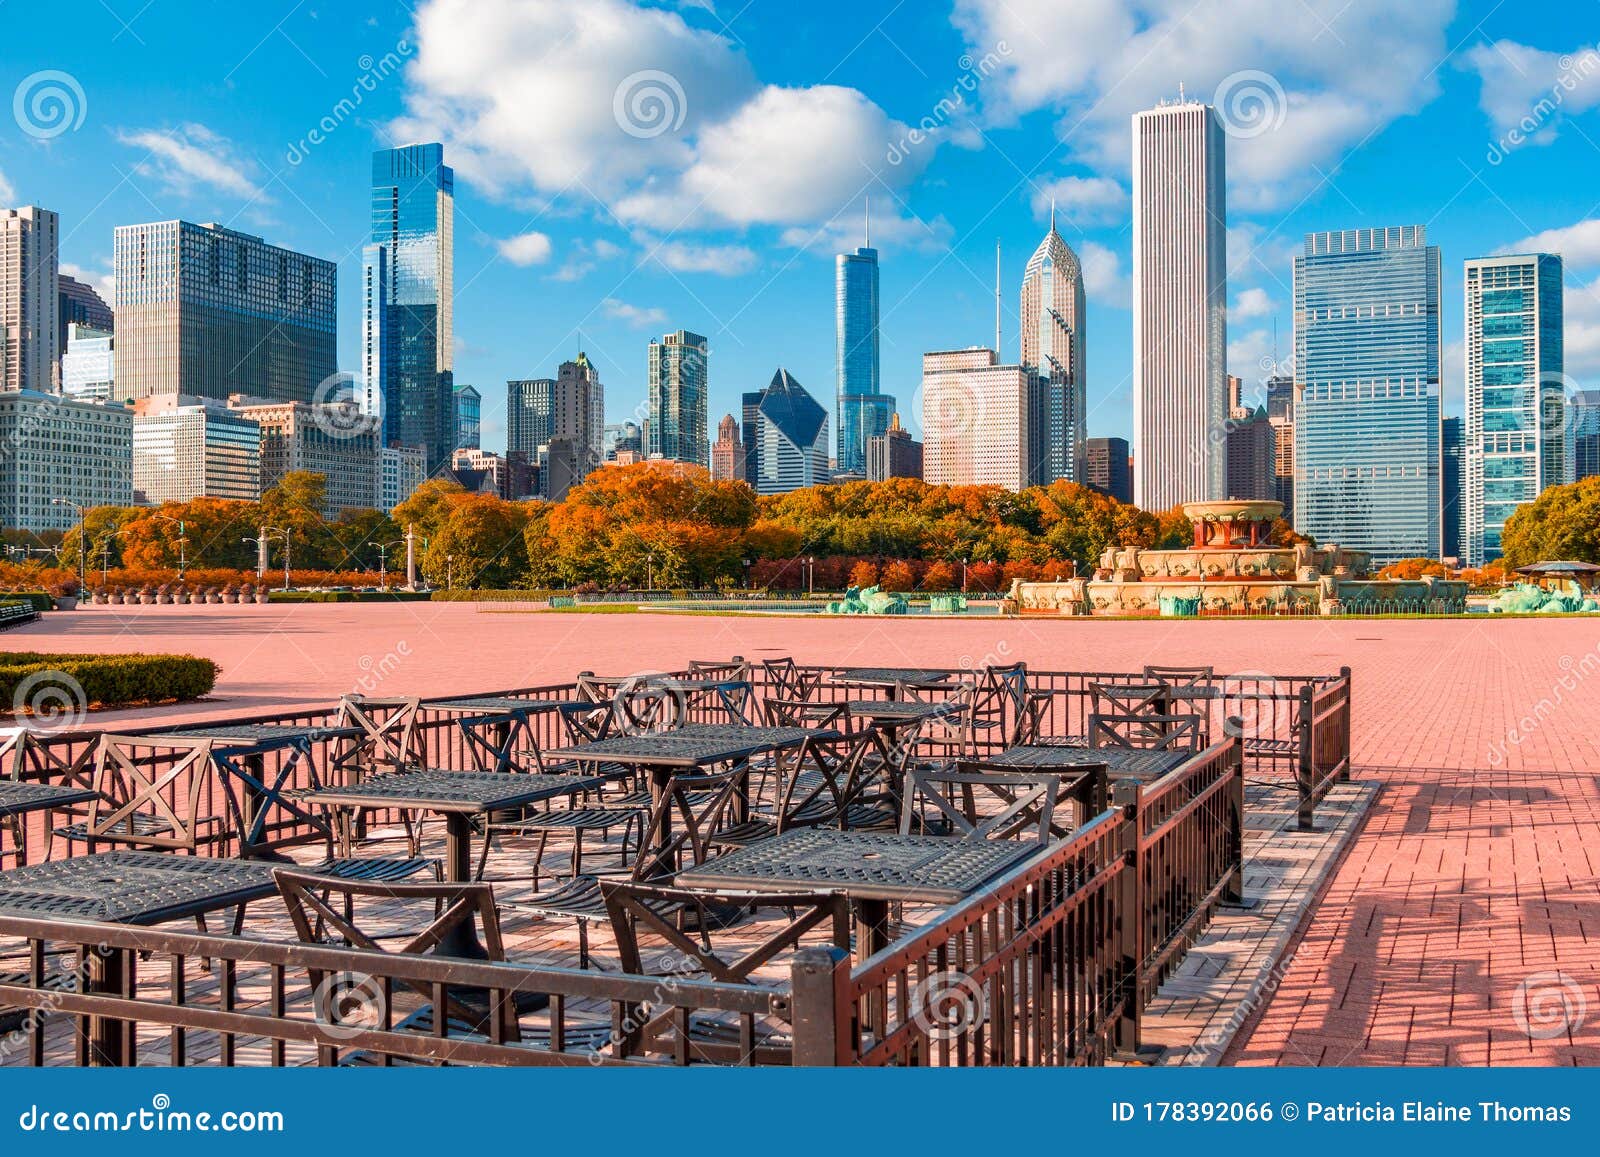 grant park`s autumn trees glow against the chicago illinois skyline